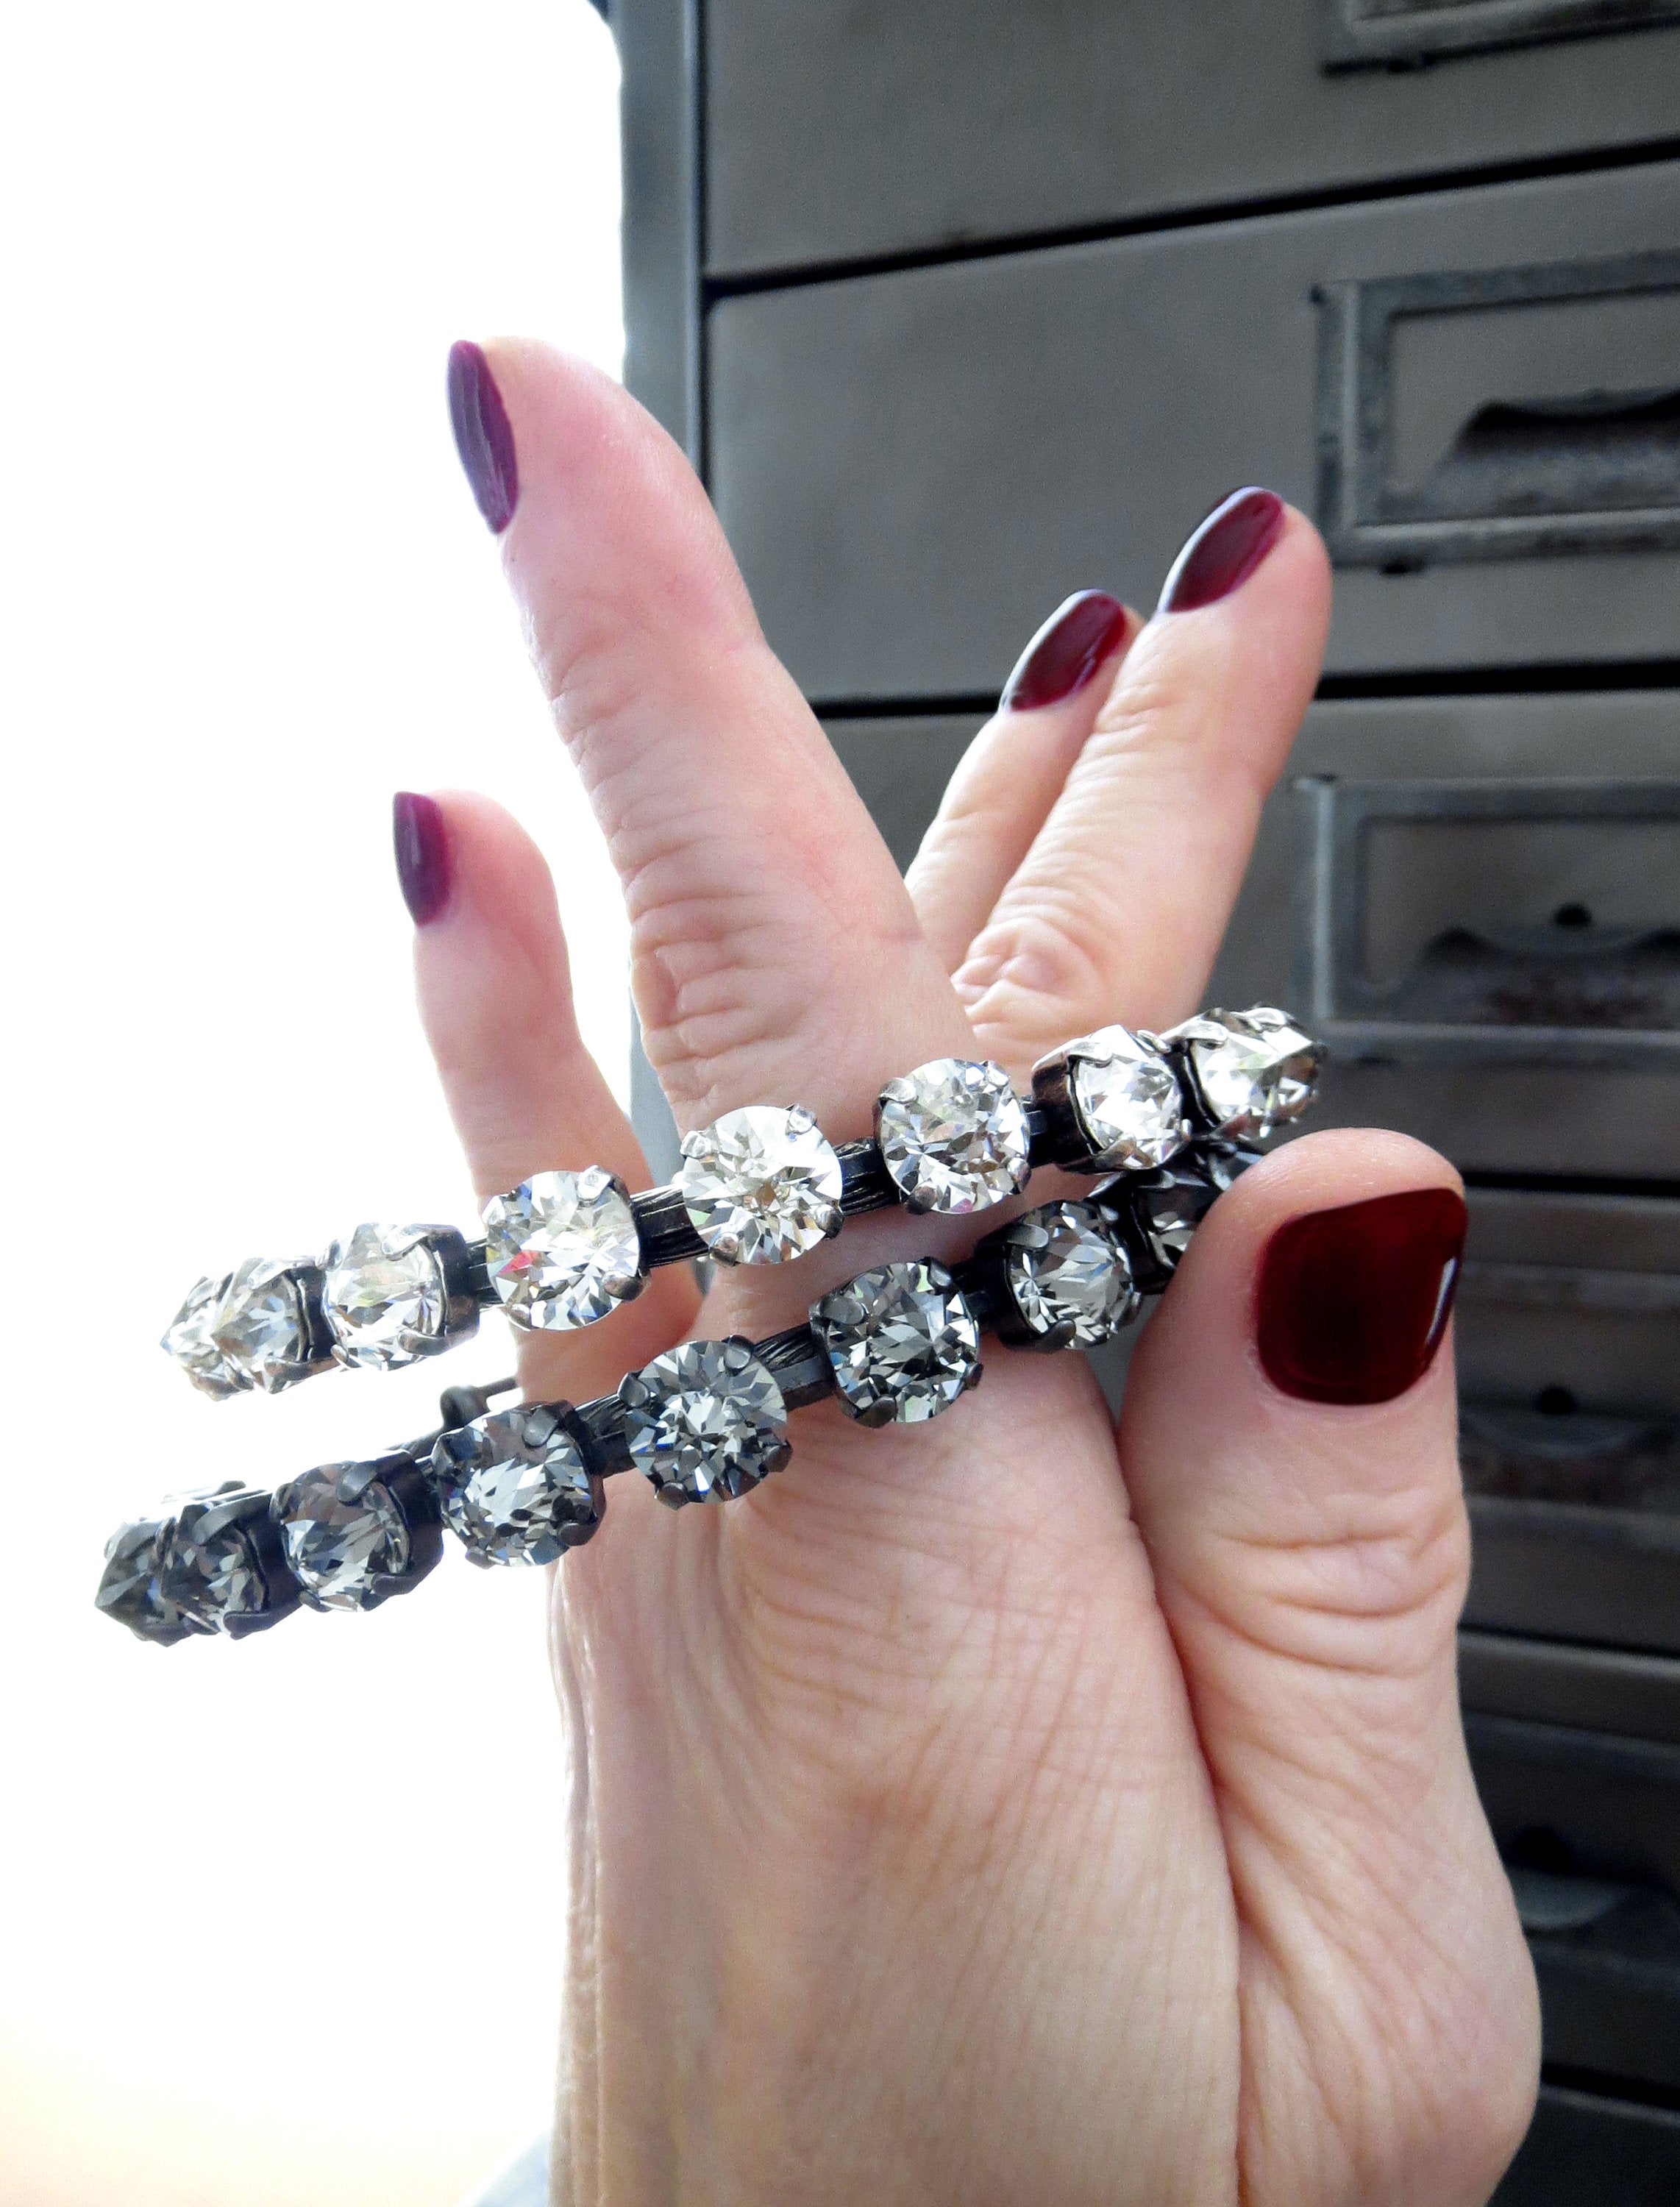 BOMBSHELL - Crystal Bangle Bracelet - Swarovski Crystal in Black Diamond or Warm Silver Shade - Adjustable Bangle - Modern Crystal Jewelry